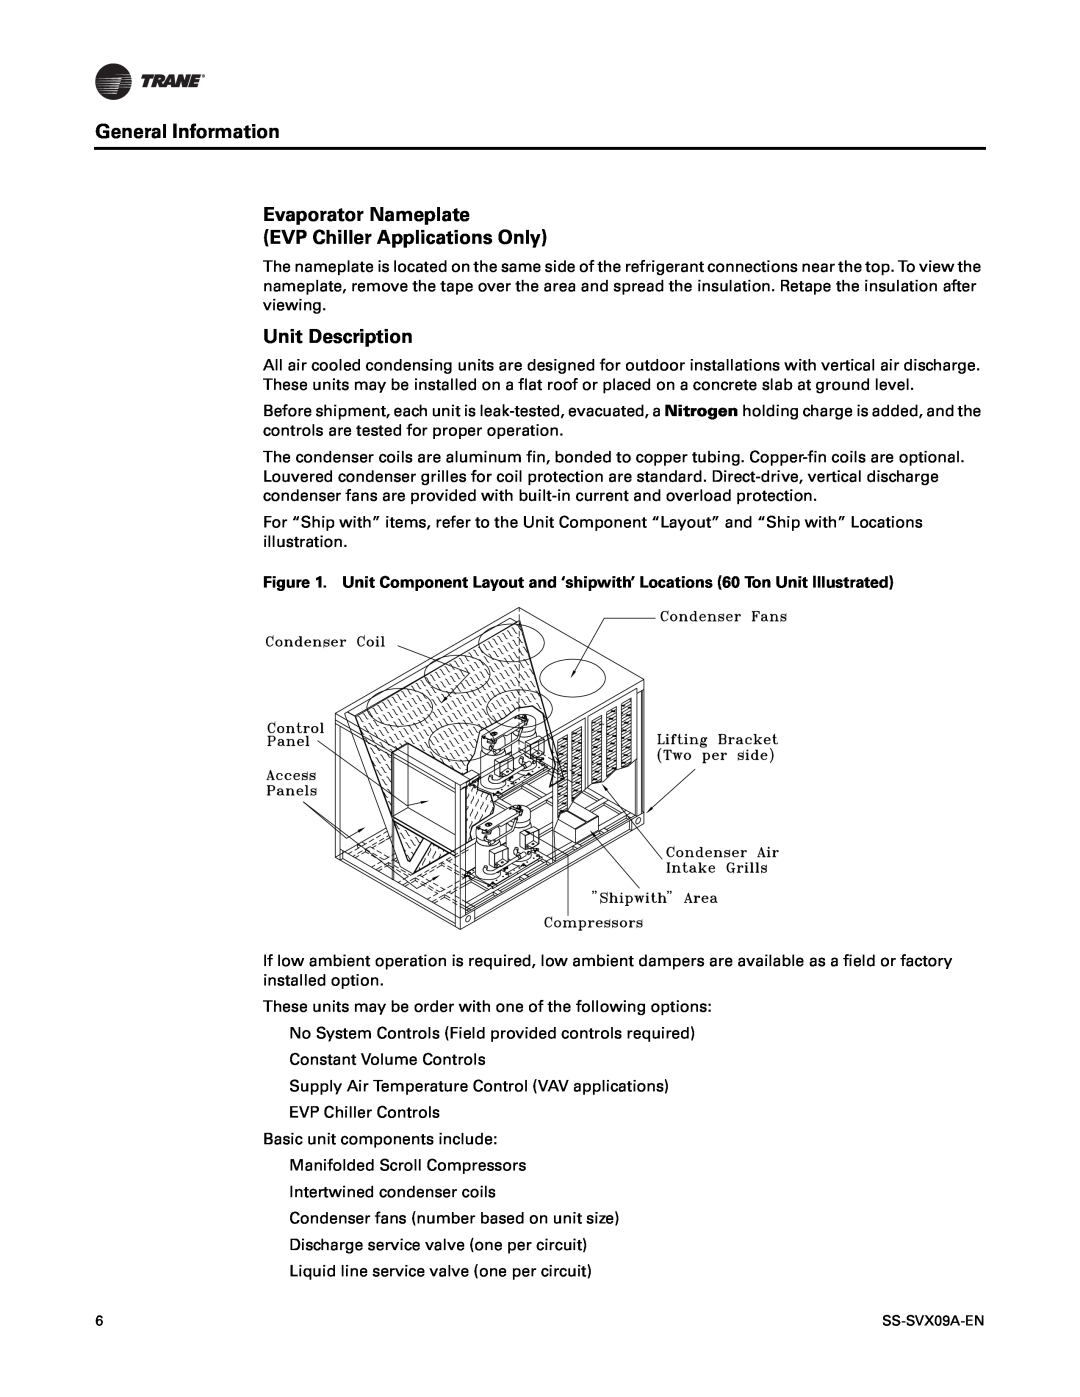 Trane RAUC-C50, RAUC-C30 manual General Information, Evaporator Nameplate, EVP Chiller Applications Only, Unit Description 